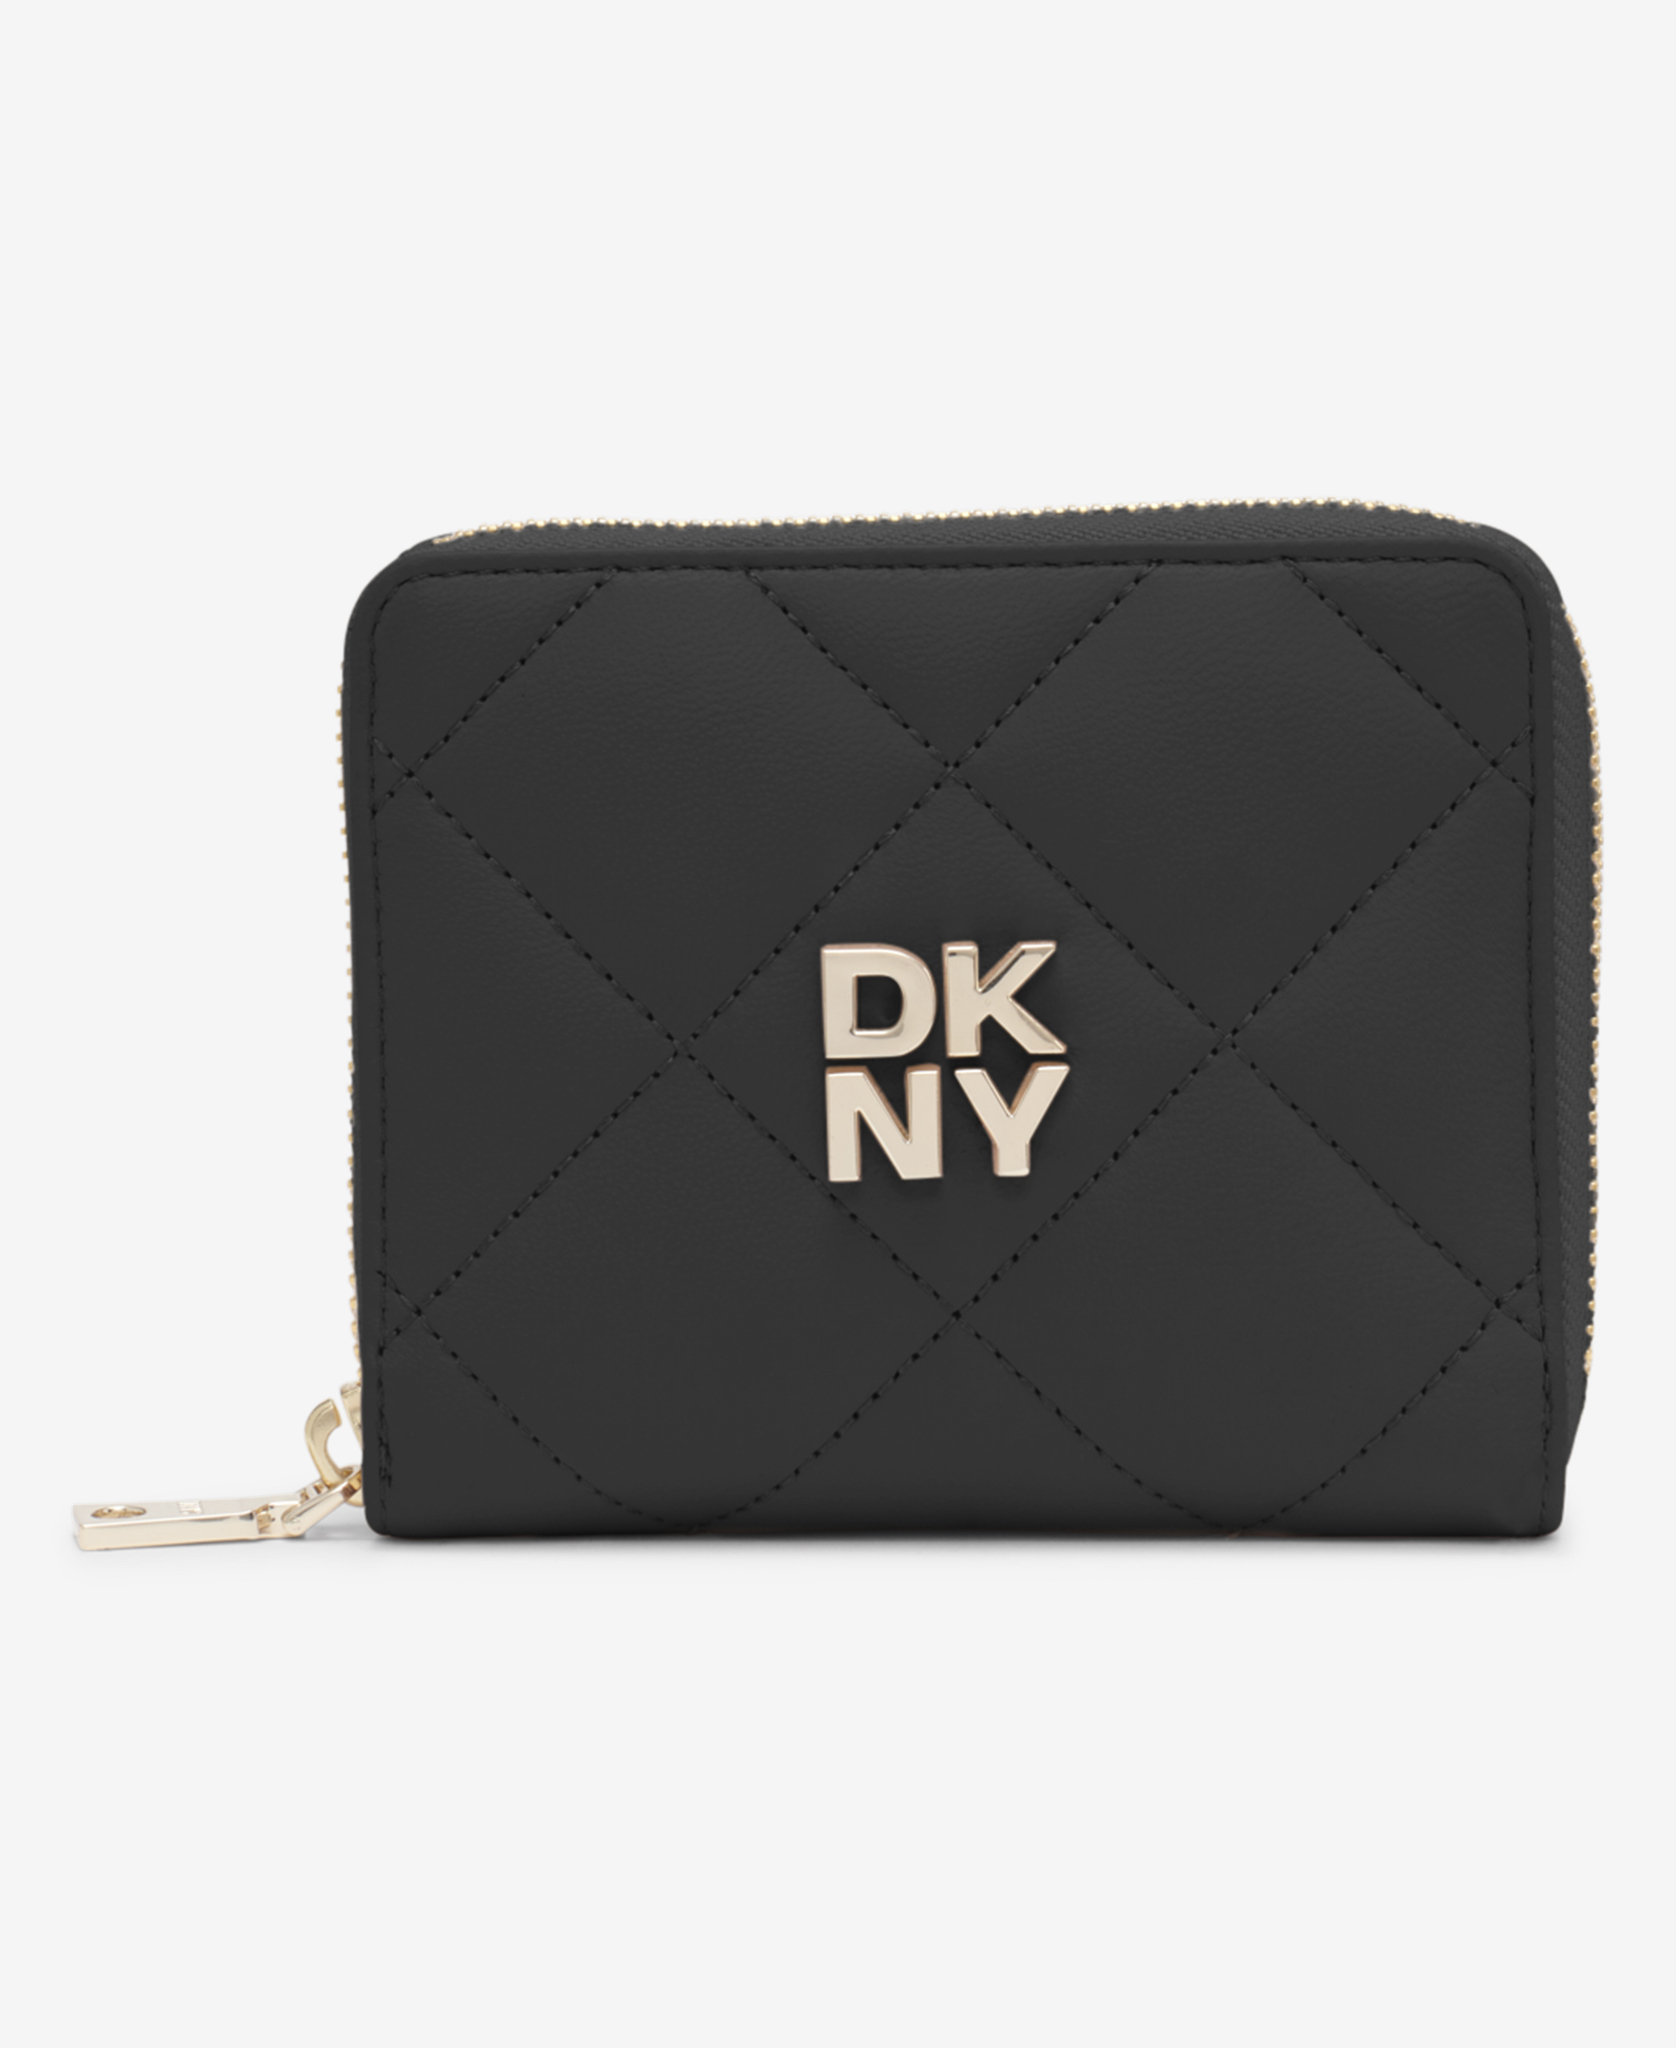 Donna Karan DKNY Red Leather Zippered Billfold Wallet Clutch Purse | eBay